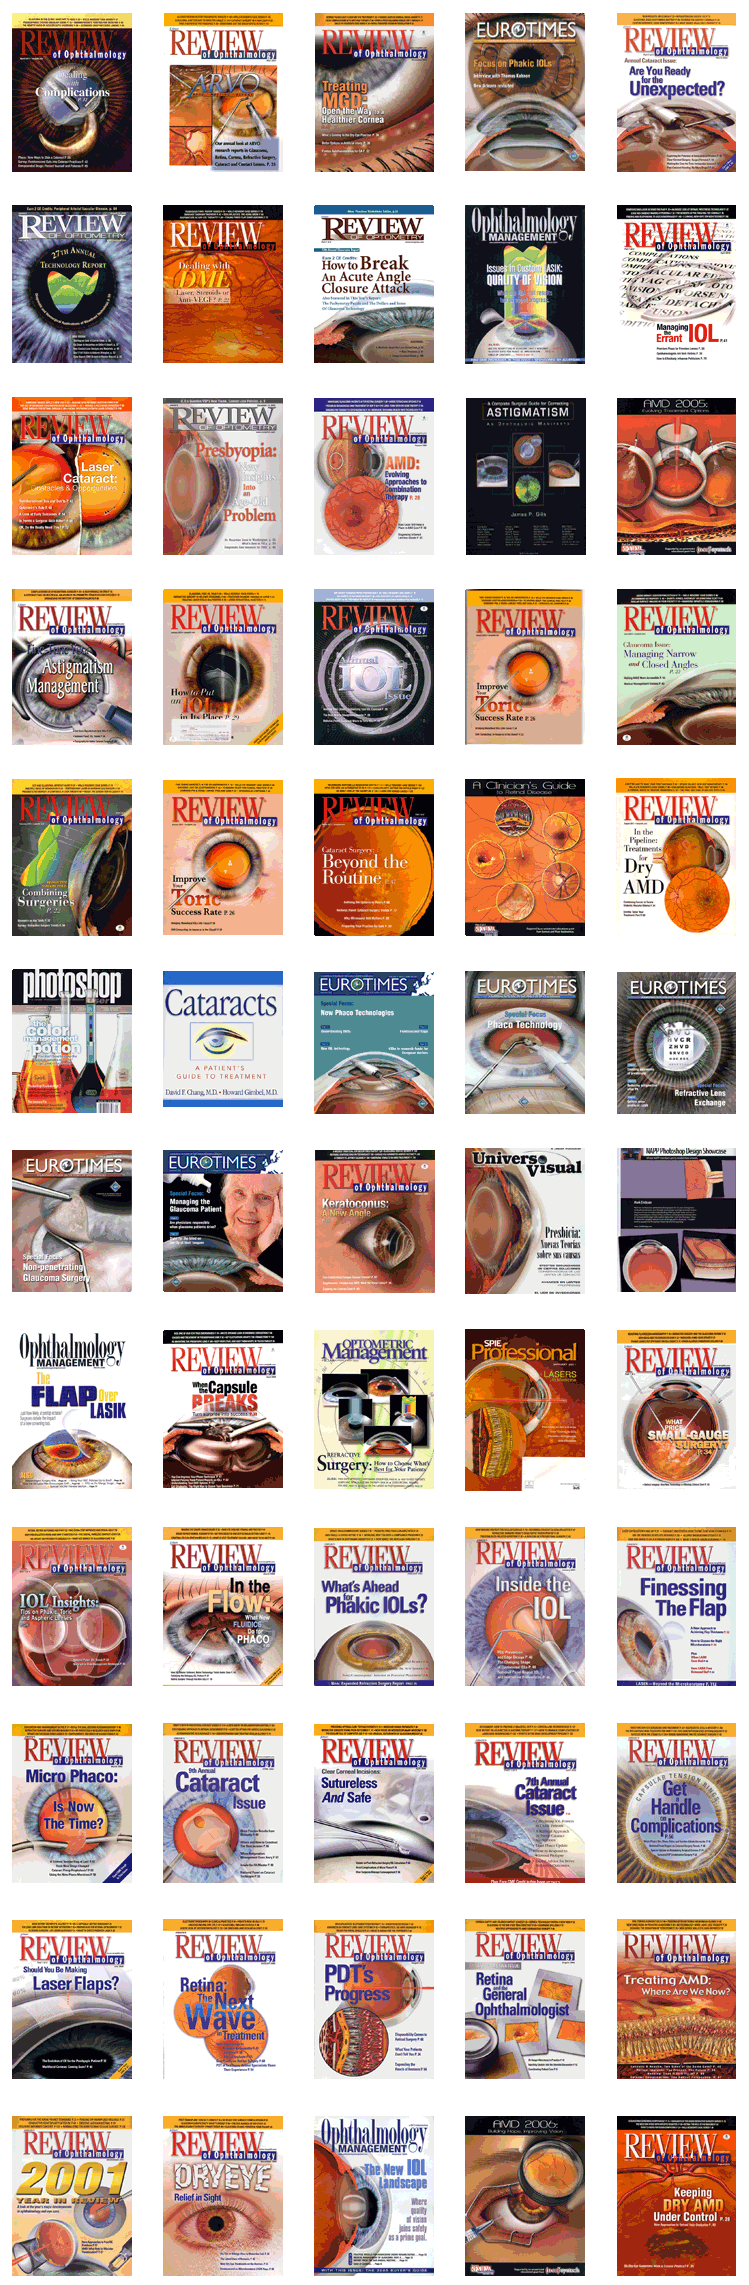 Medical illustration portfolio magazine covers